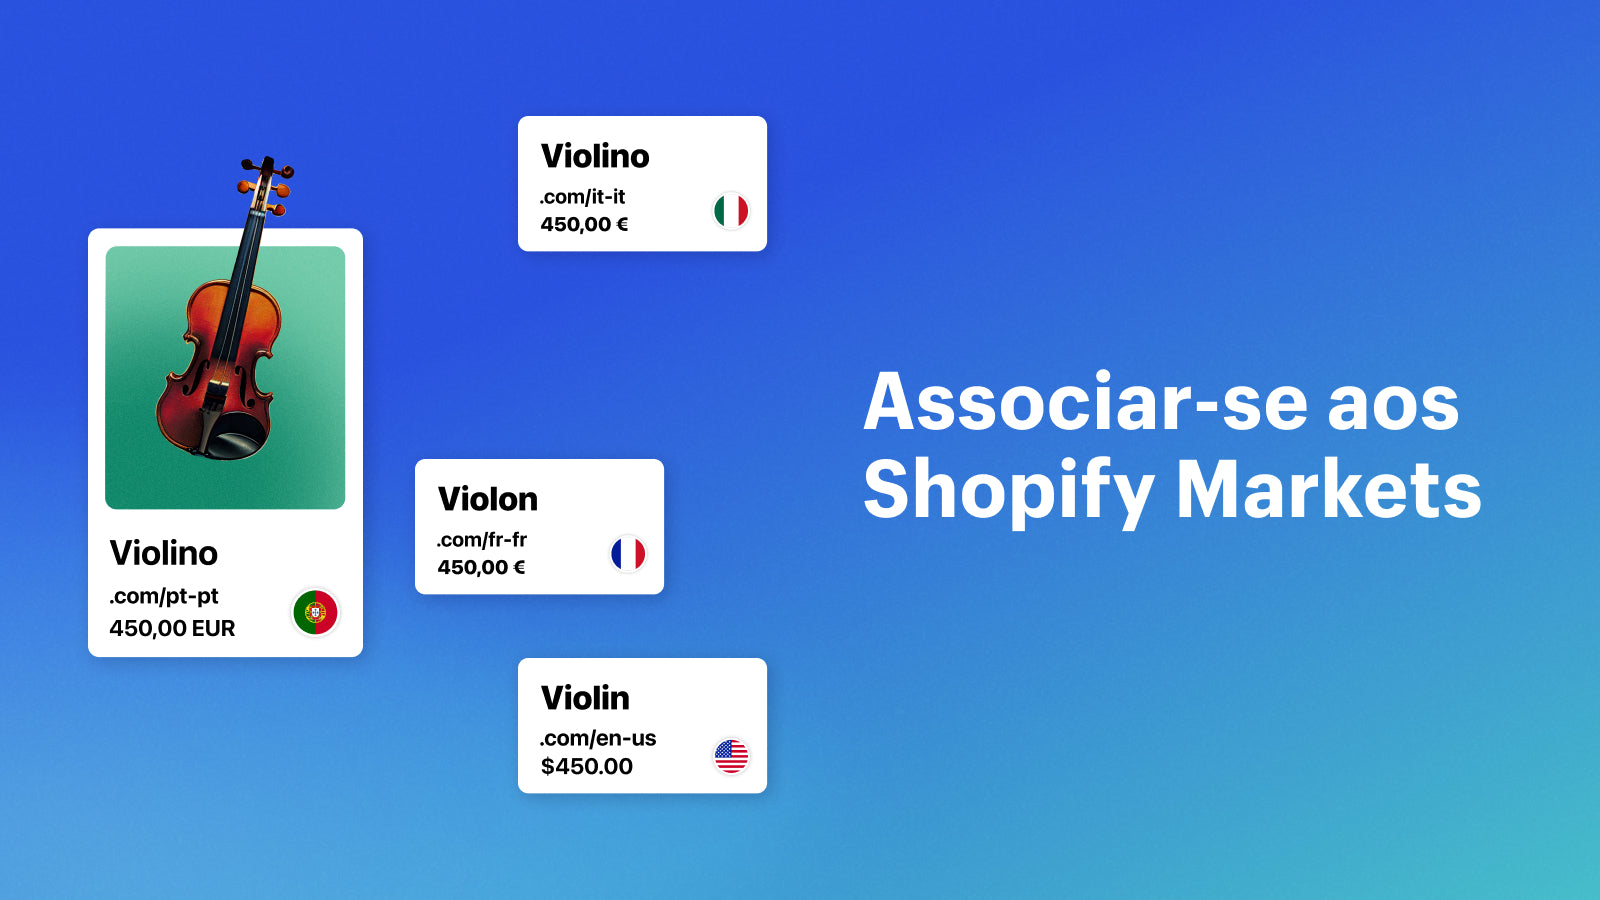 Associar-se aos Shopify Markets